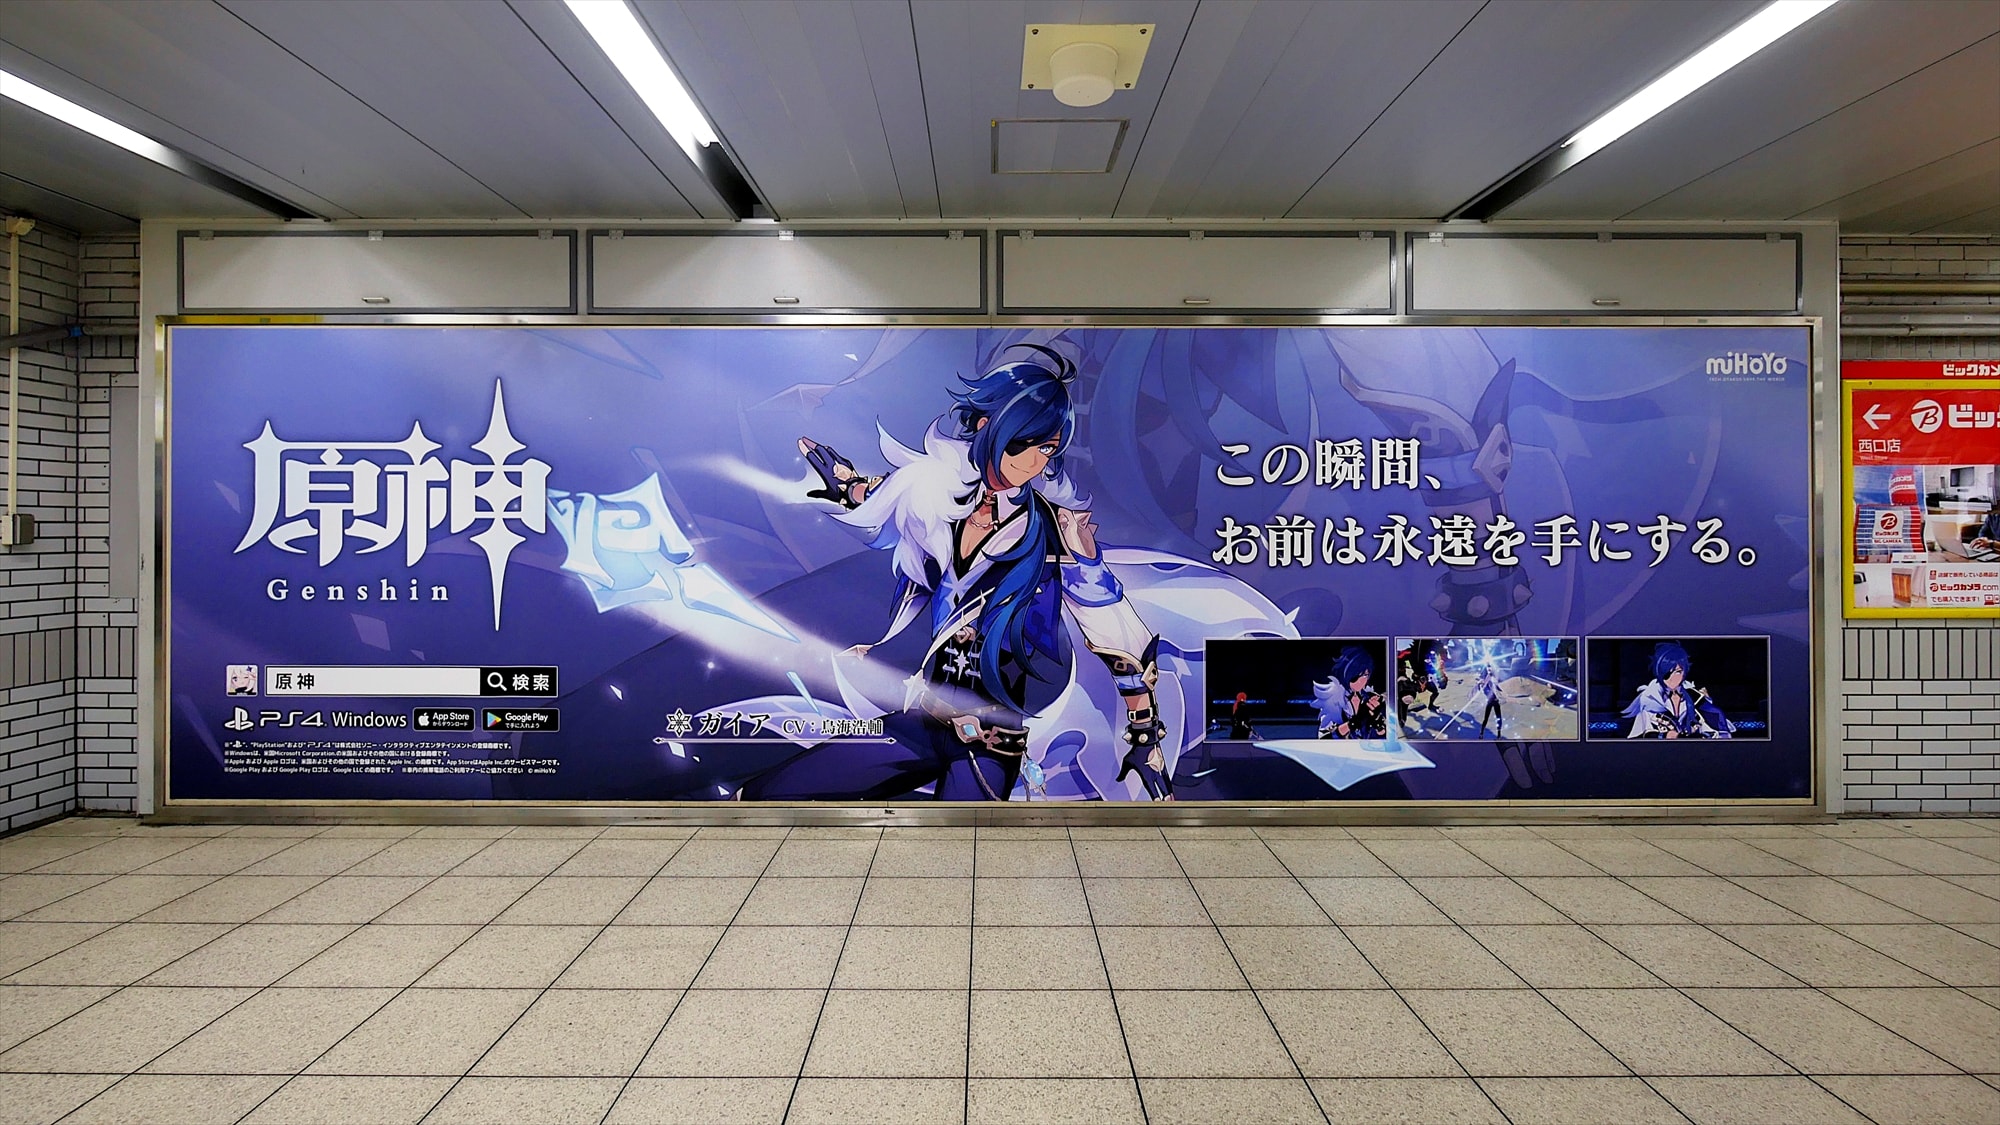 Genshin Impact Ikebukuro Station - Kaeya banner